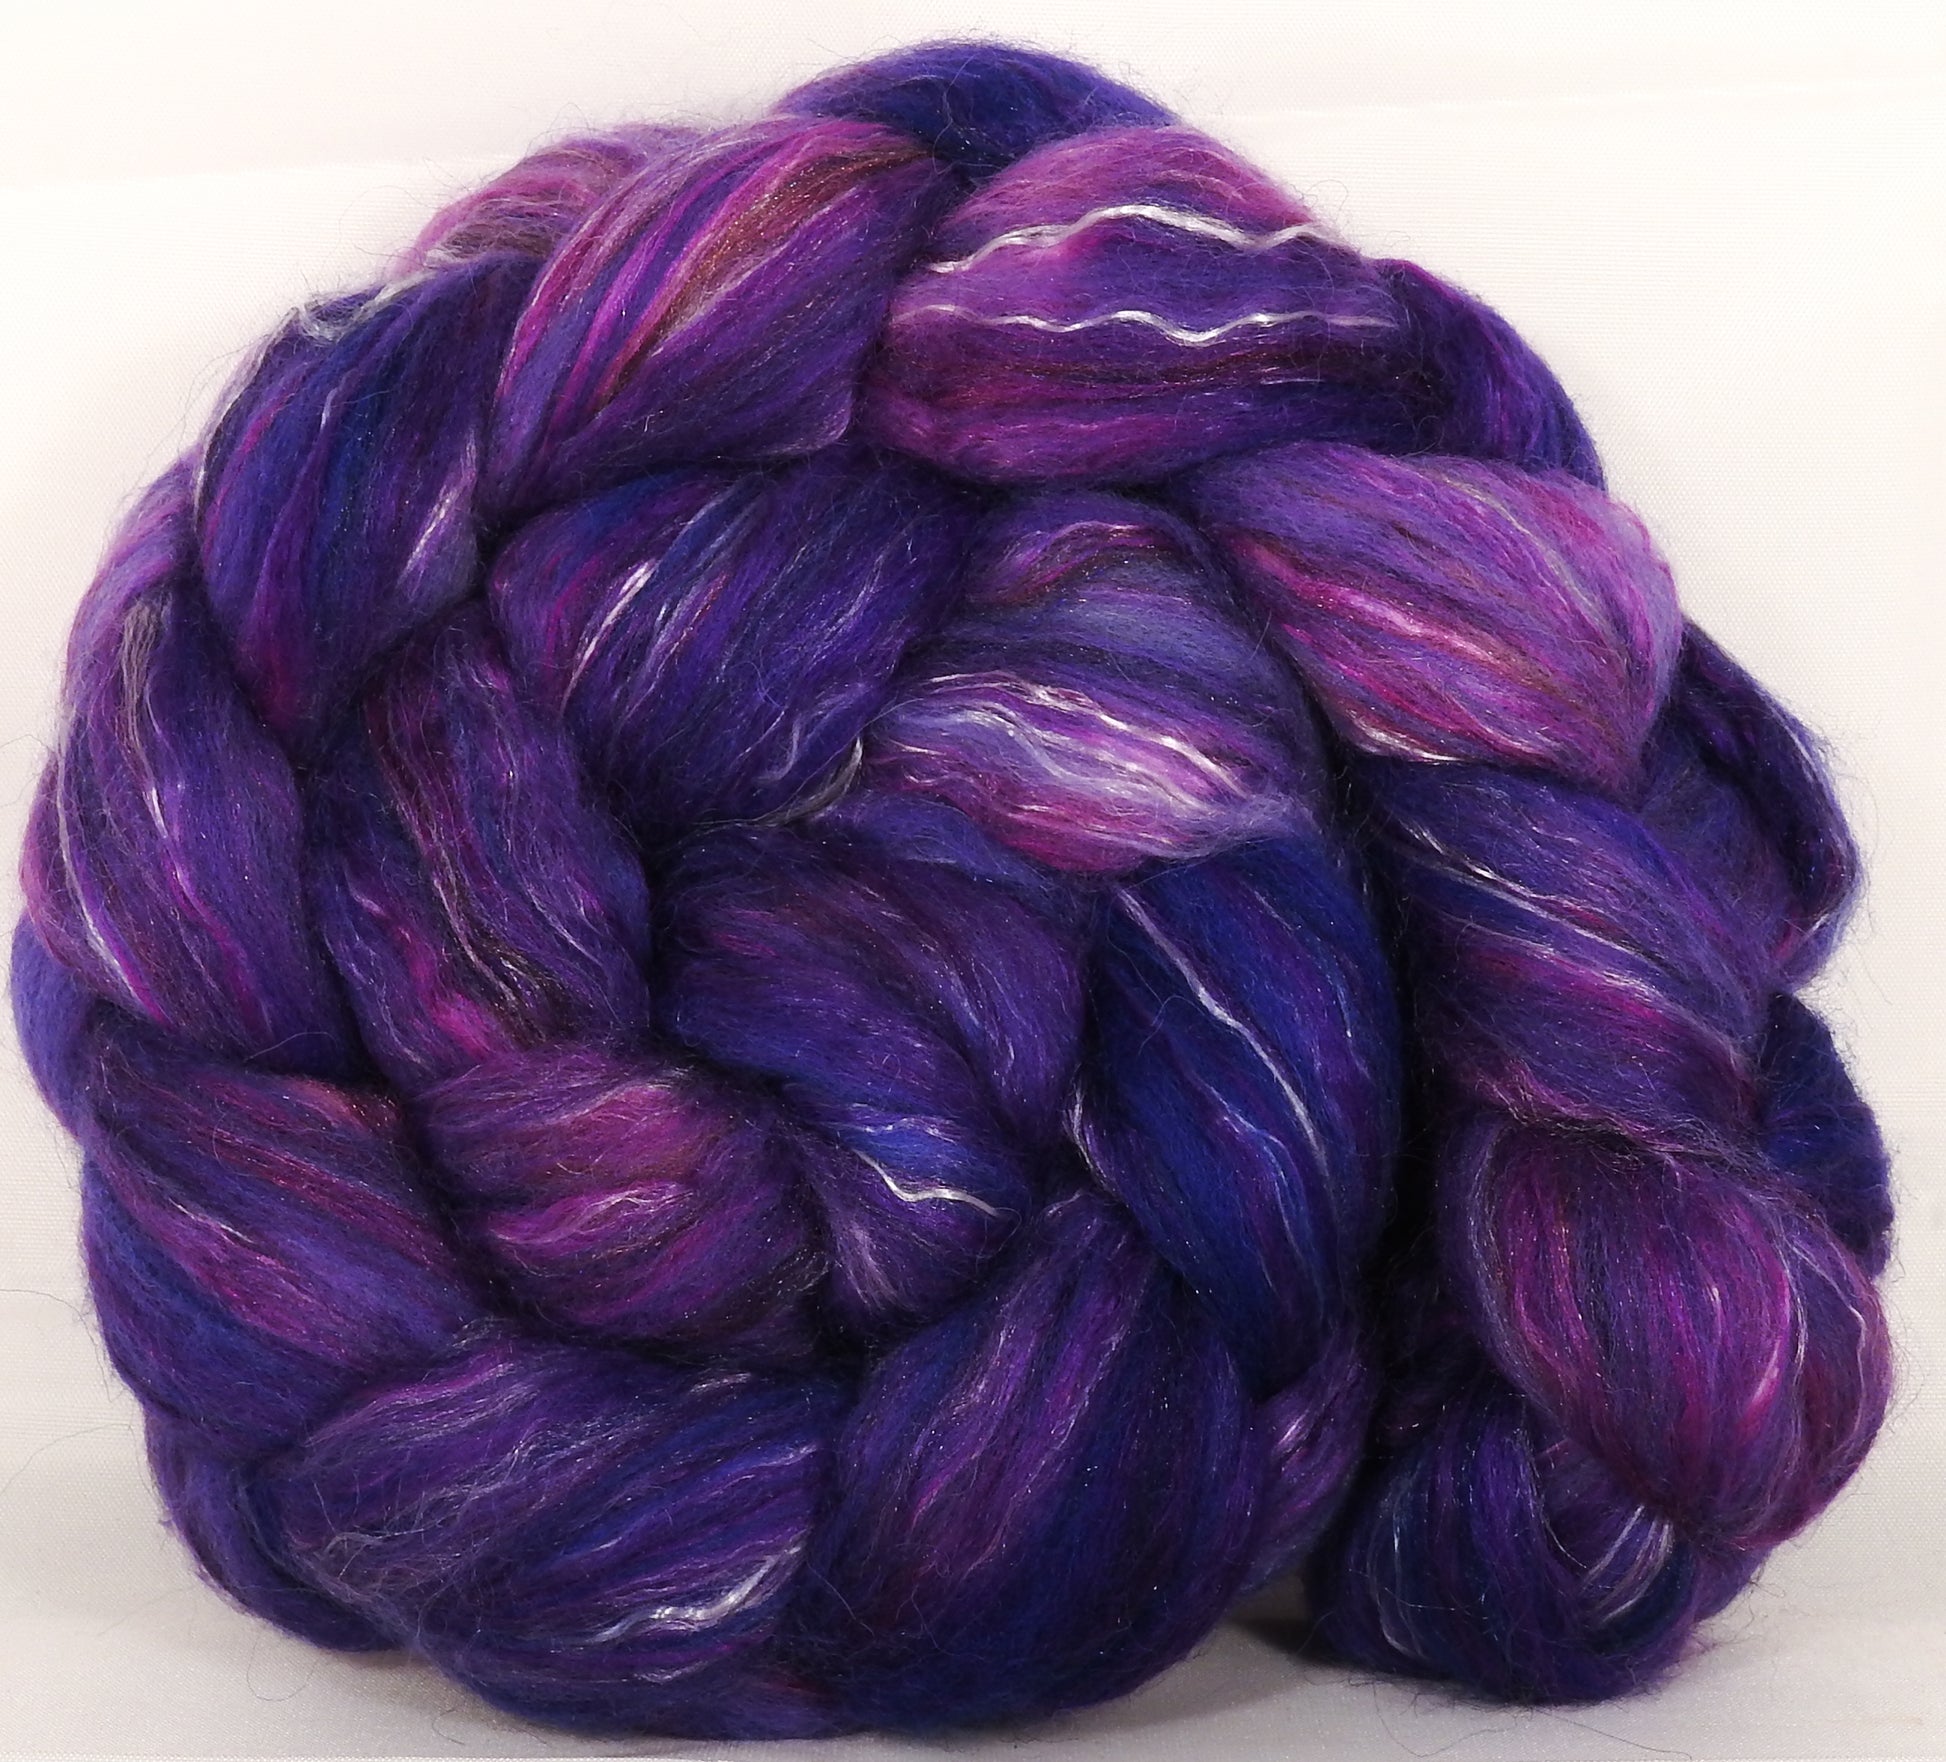 Batt in a Braid #31-So Very Violet -( 5.5 oz. ) - Polwarth/ Mulberry Silk / Baby Alpaca / Rainbow Firestar/ Tencel( 40/25/15/10/10) - Inglenook Fibers